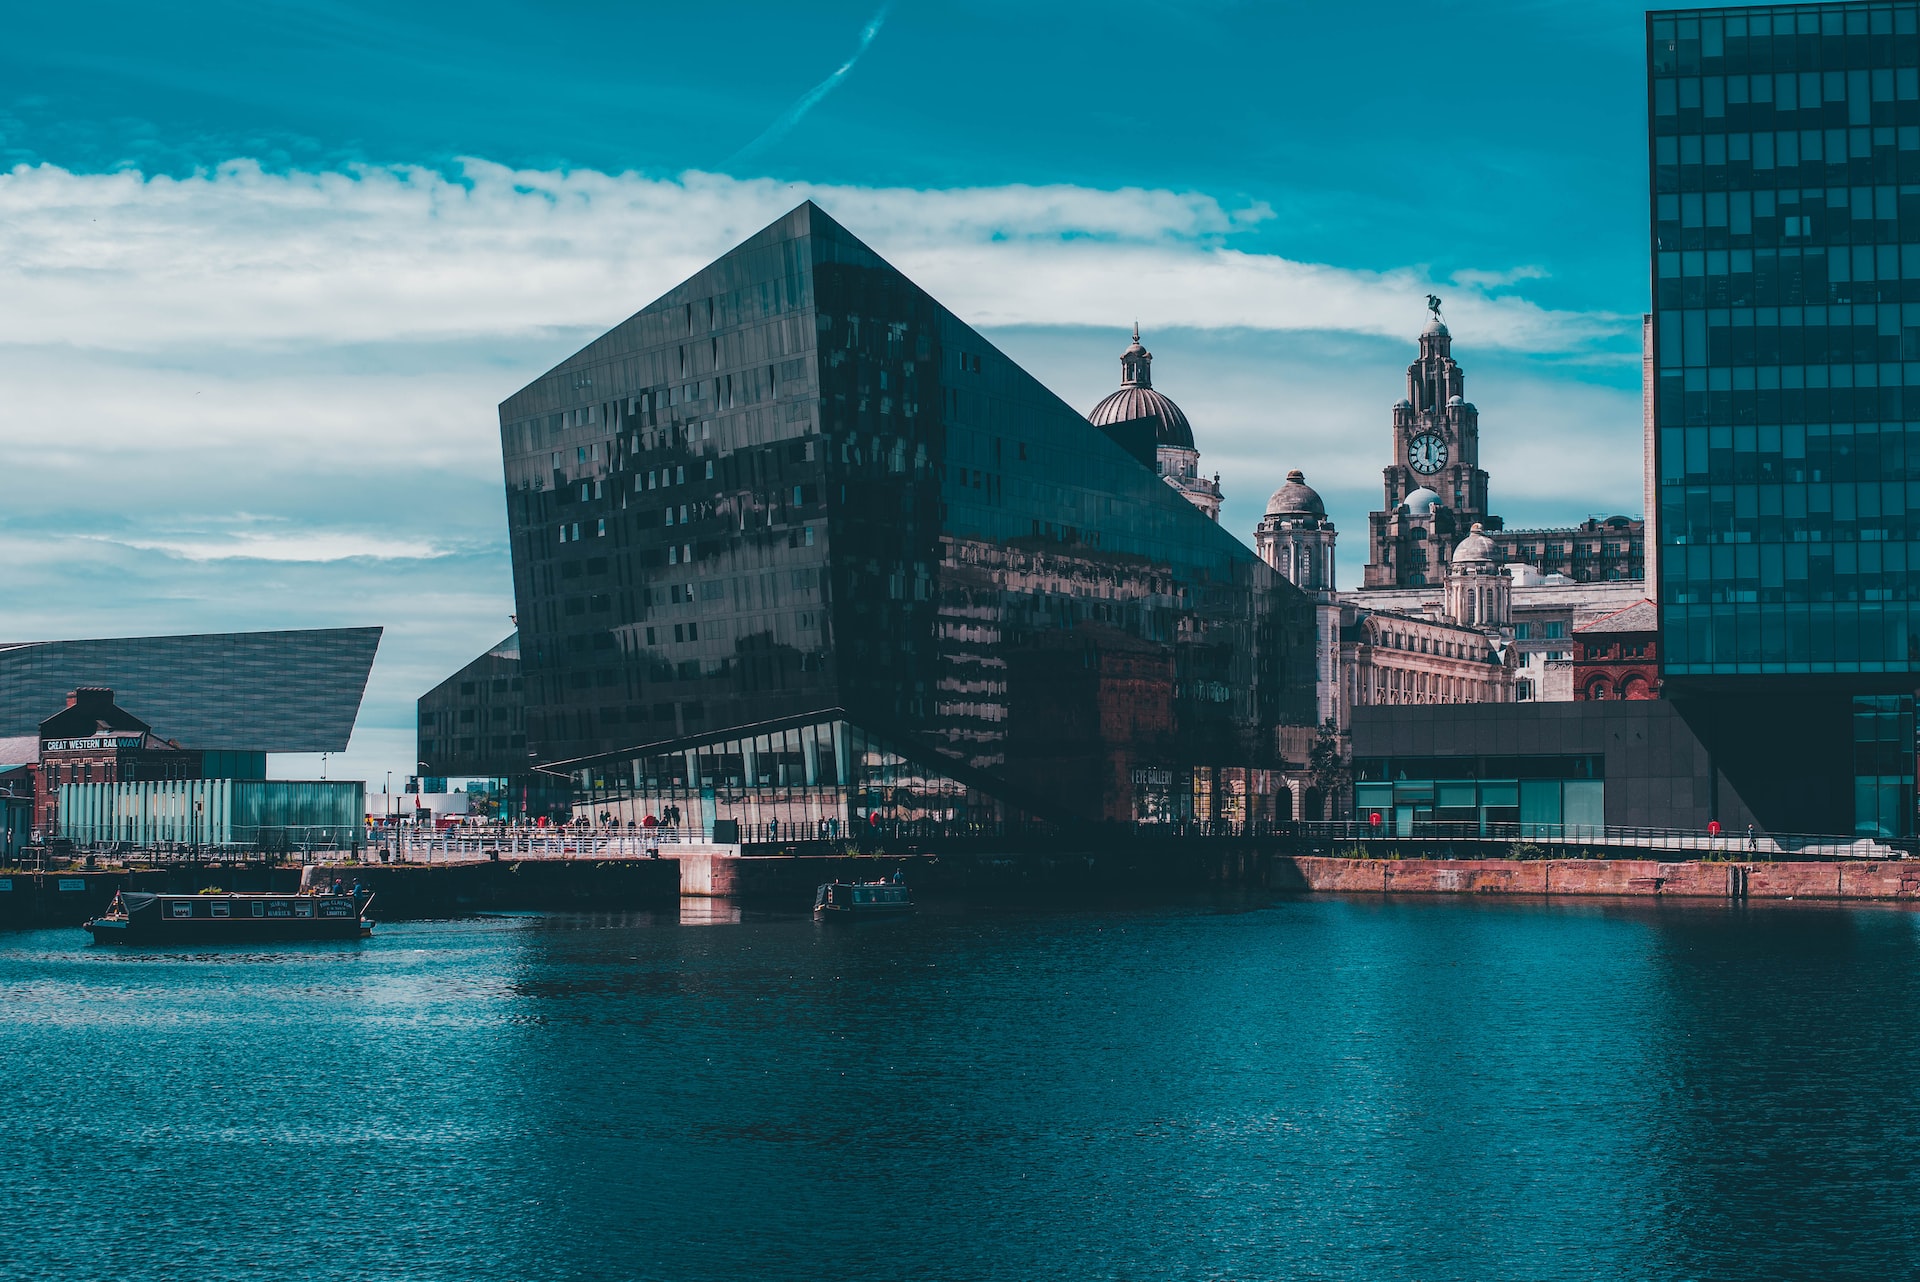 The modern-looking Albert Dock along the waterside in Liverpool.